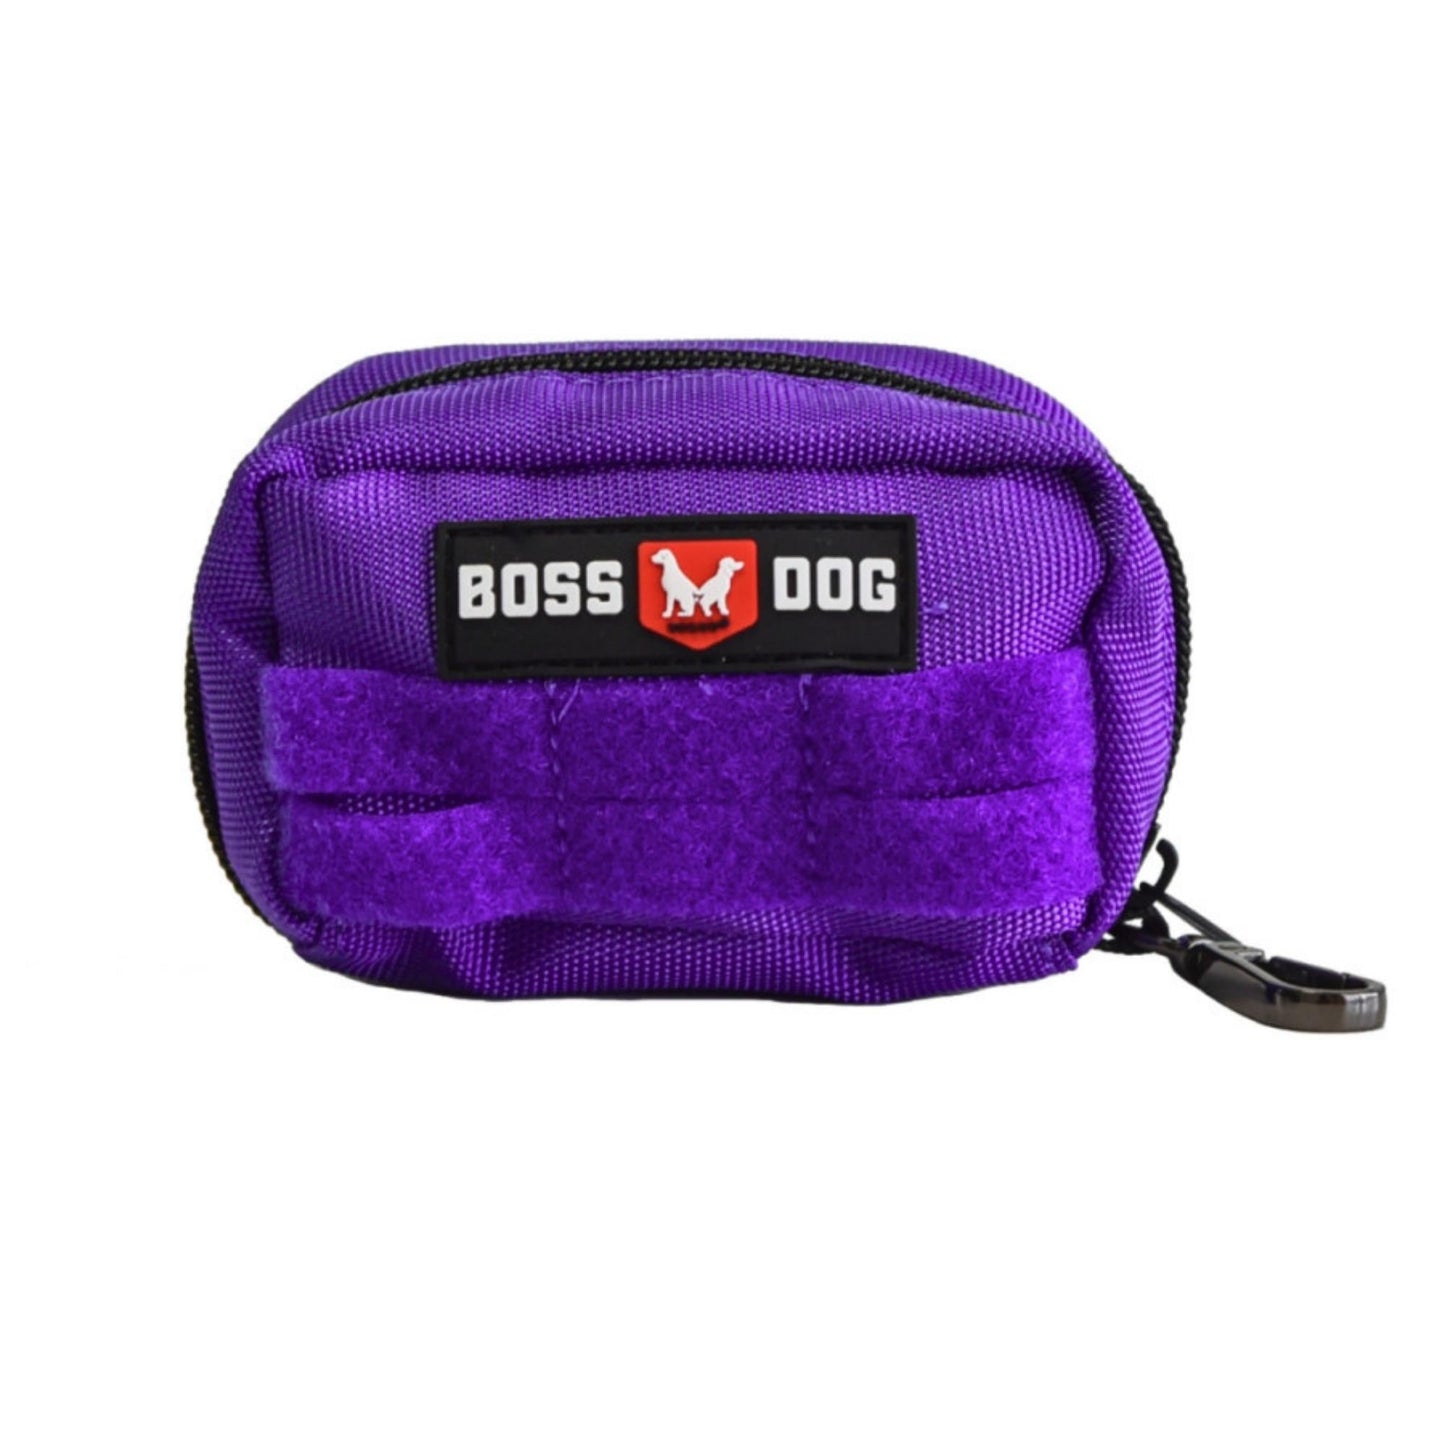 Boss Dog Tactical Molle Harness Bag Purple, 1ea/Small